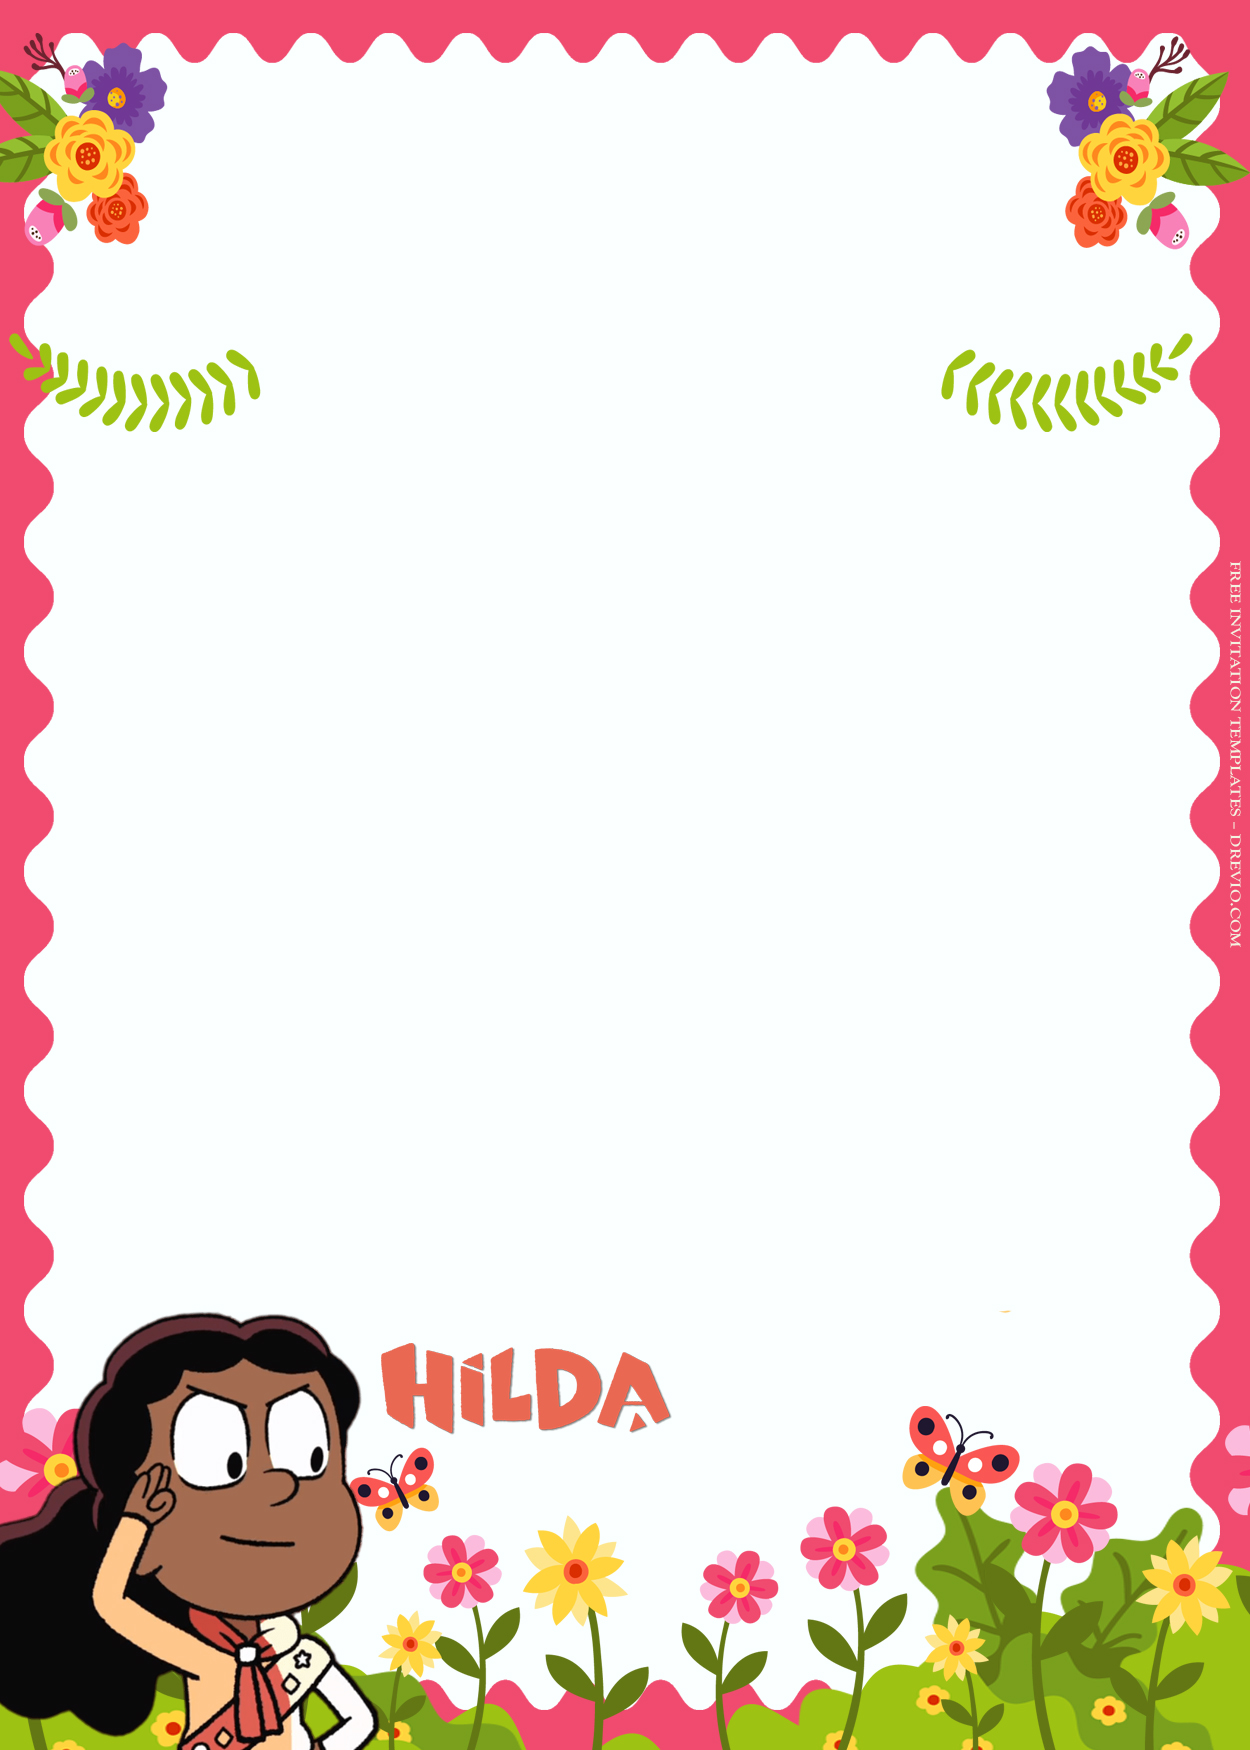 11+ Hilda And Friends Birthday Invitation Templates Five